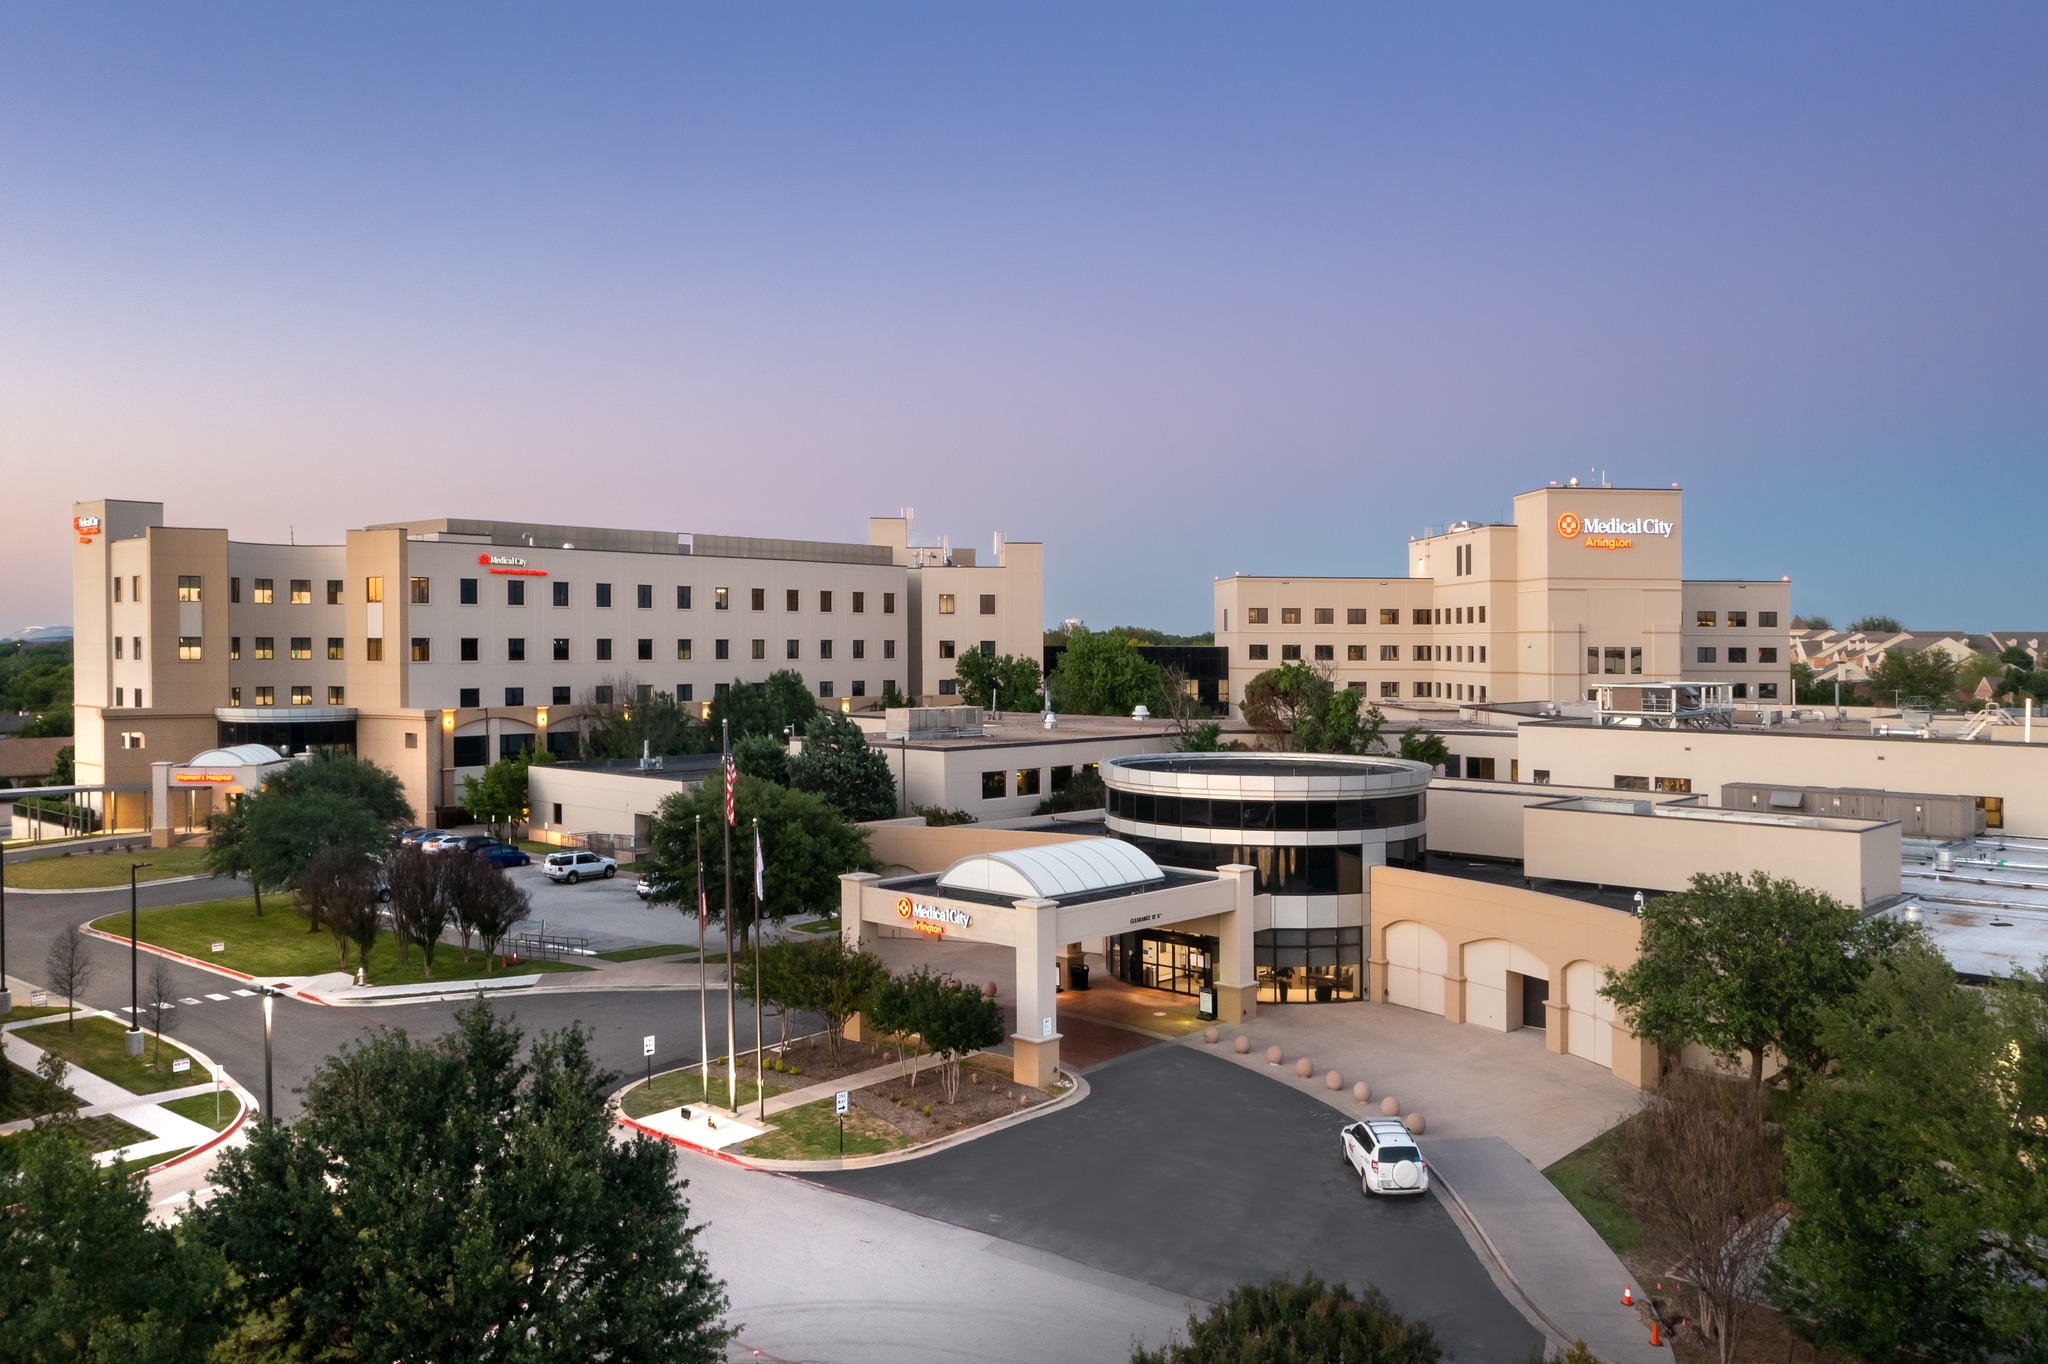 Exterior view of the main entrance to Medical City Arlington Hospital at dusk.